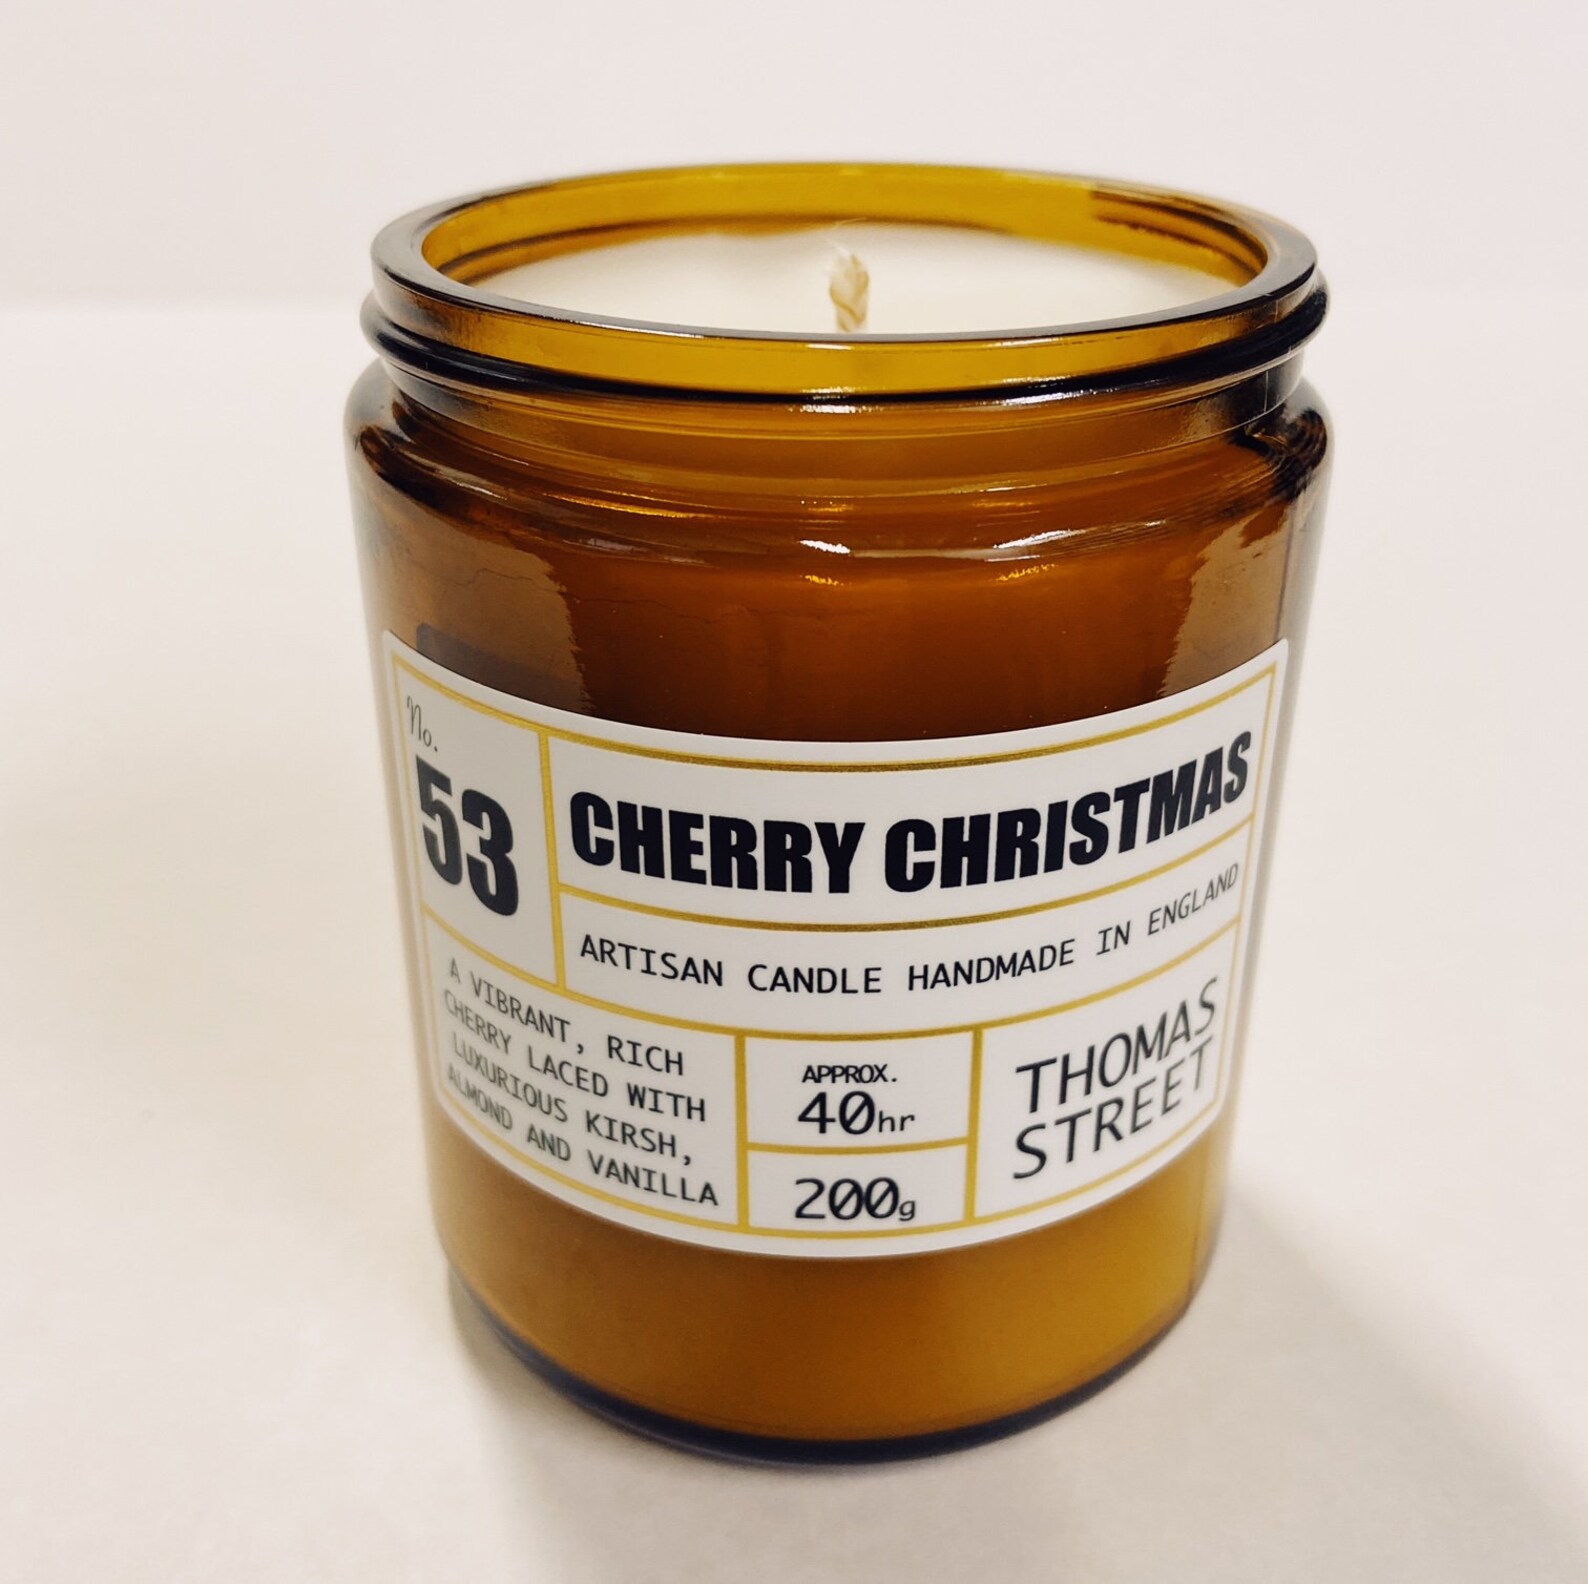 Cherry Christmas Thomas Street Candle